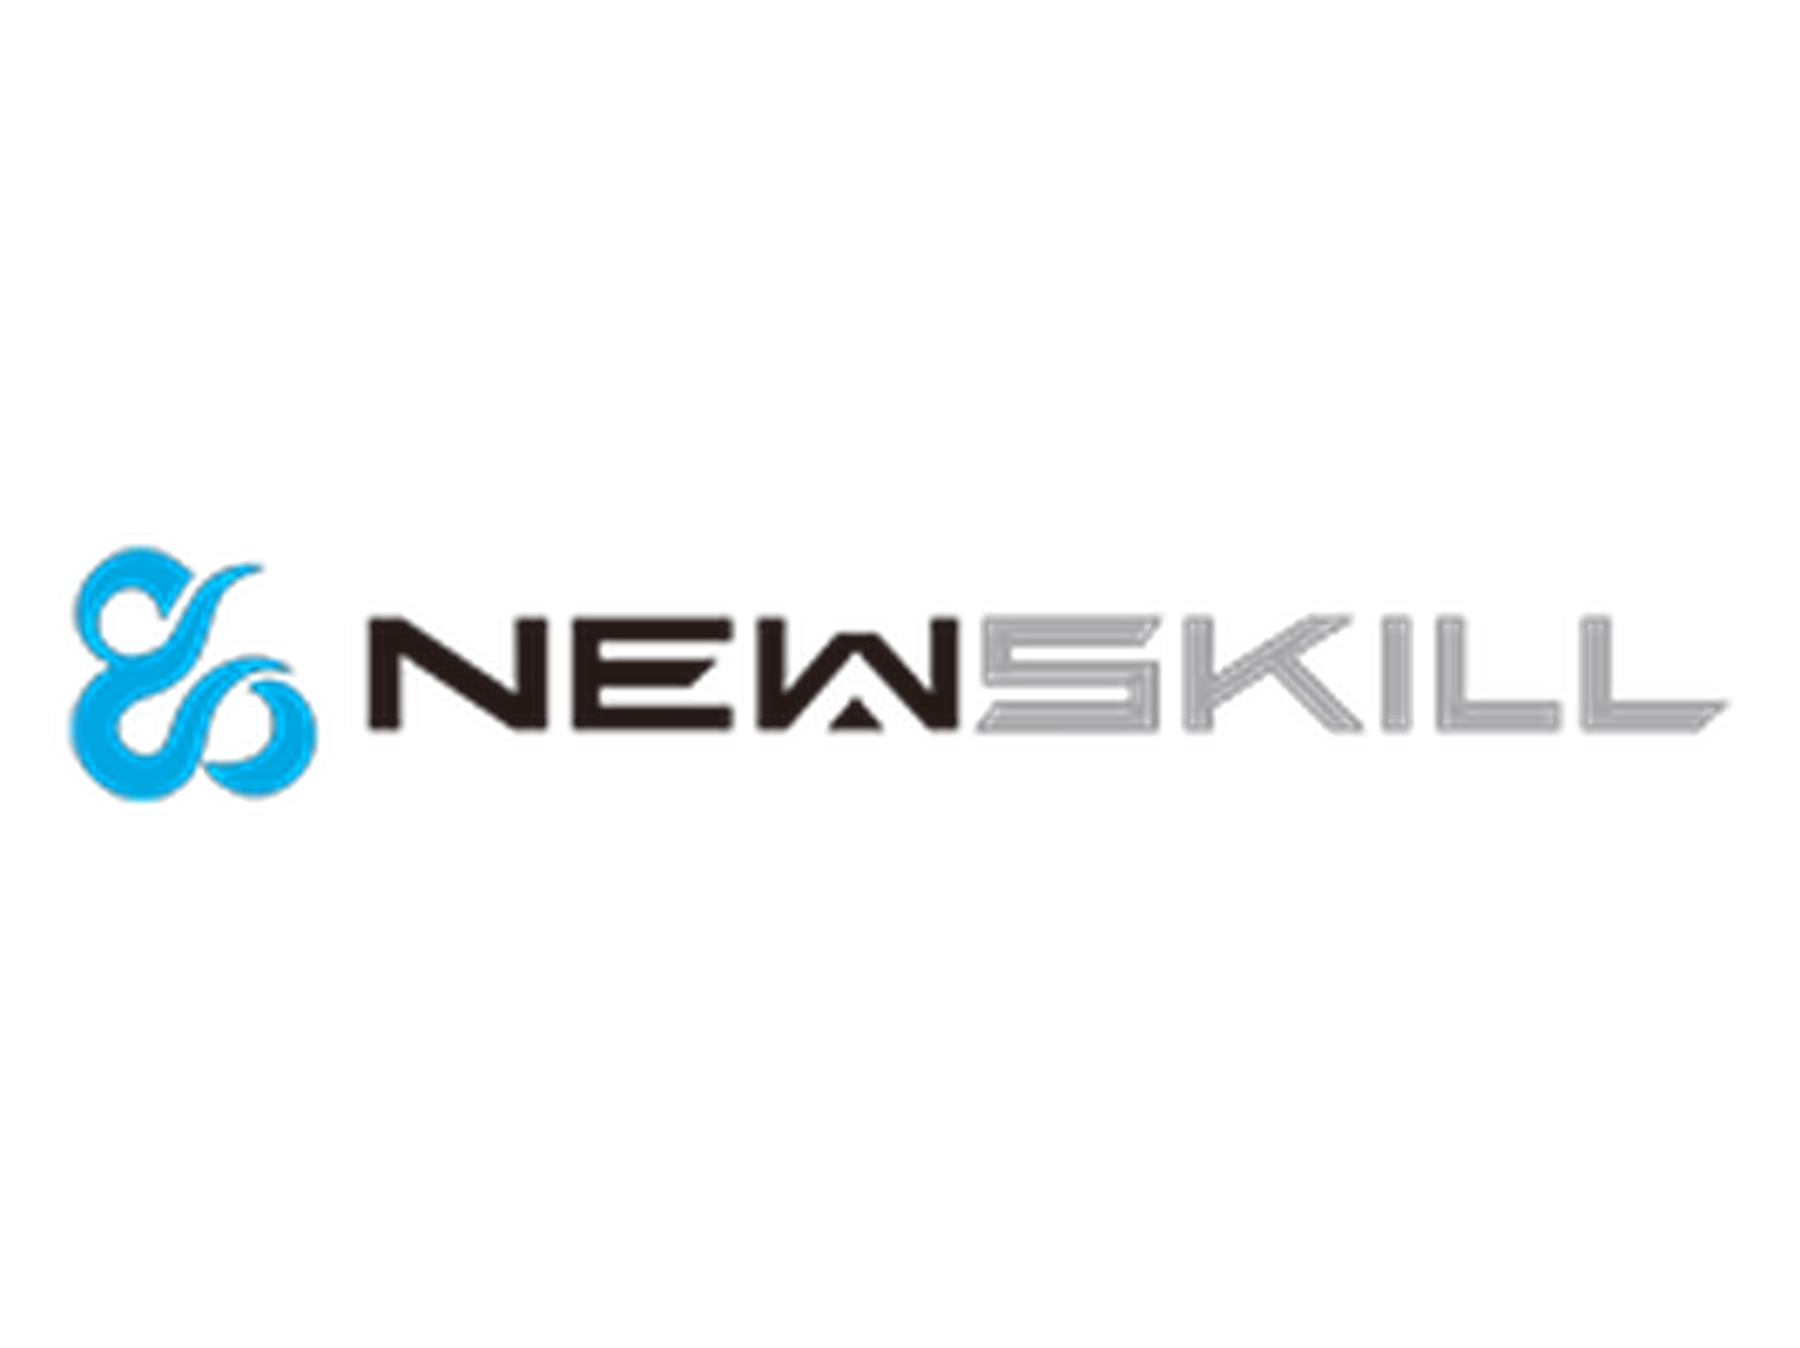 Código descuento Newskill Gaming